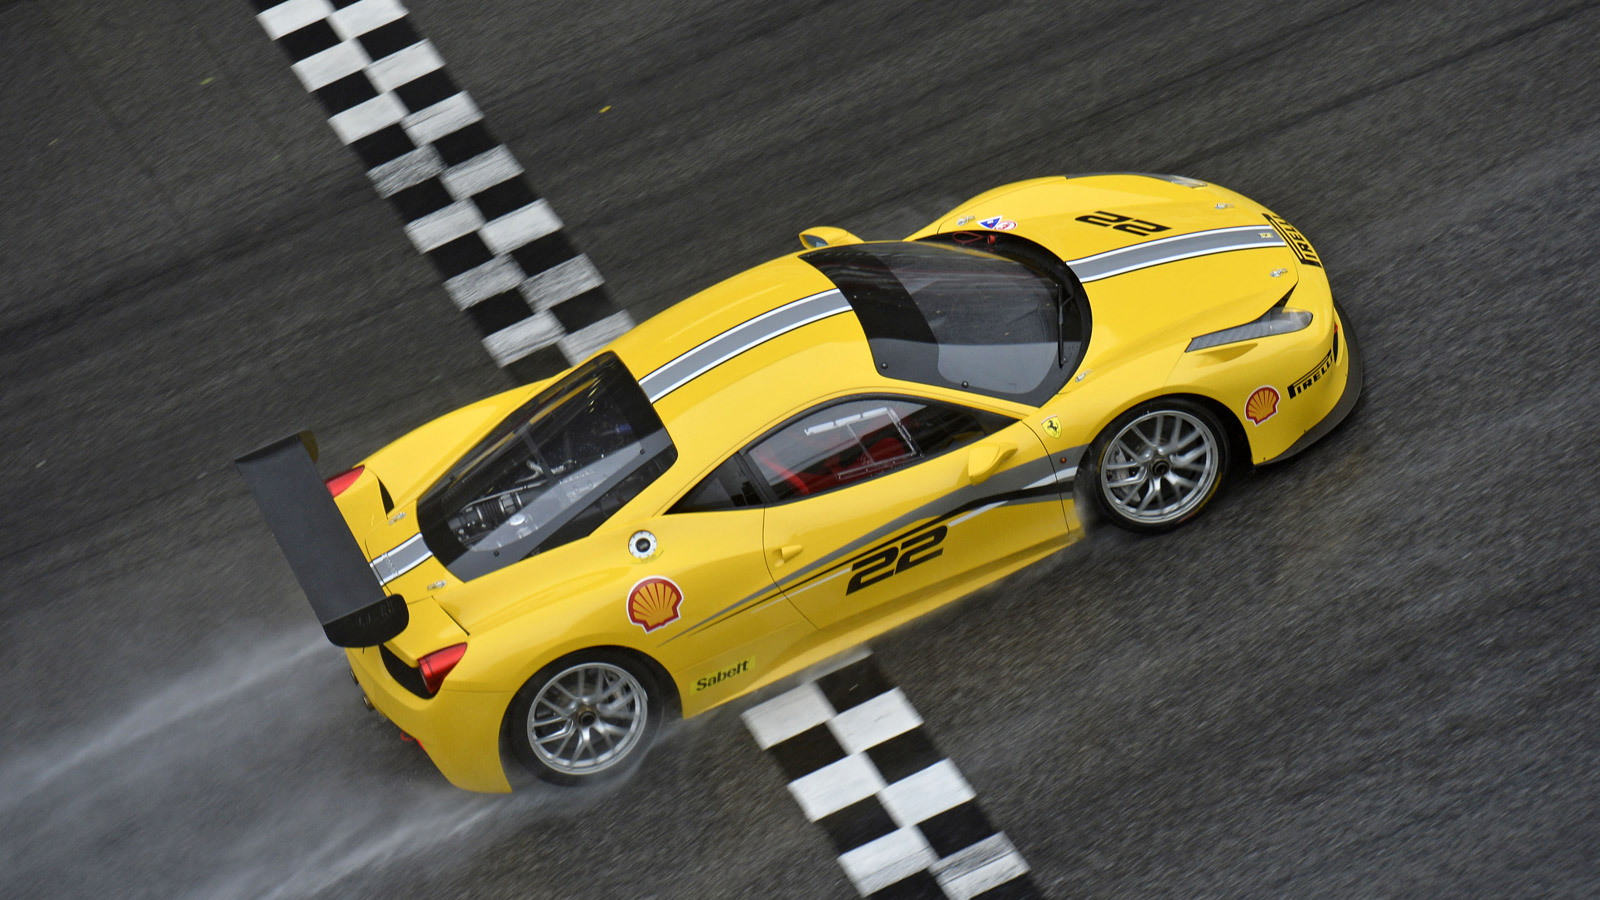 2014 Ferrari 458 Challenge Evoluzione race car